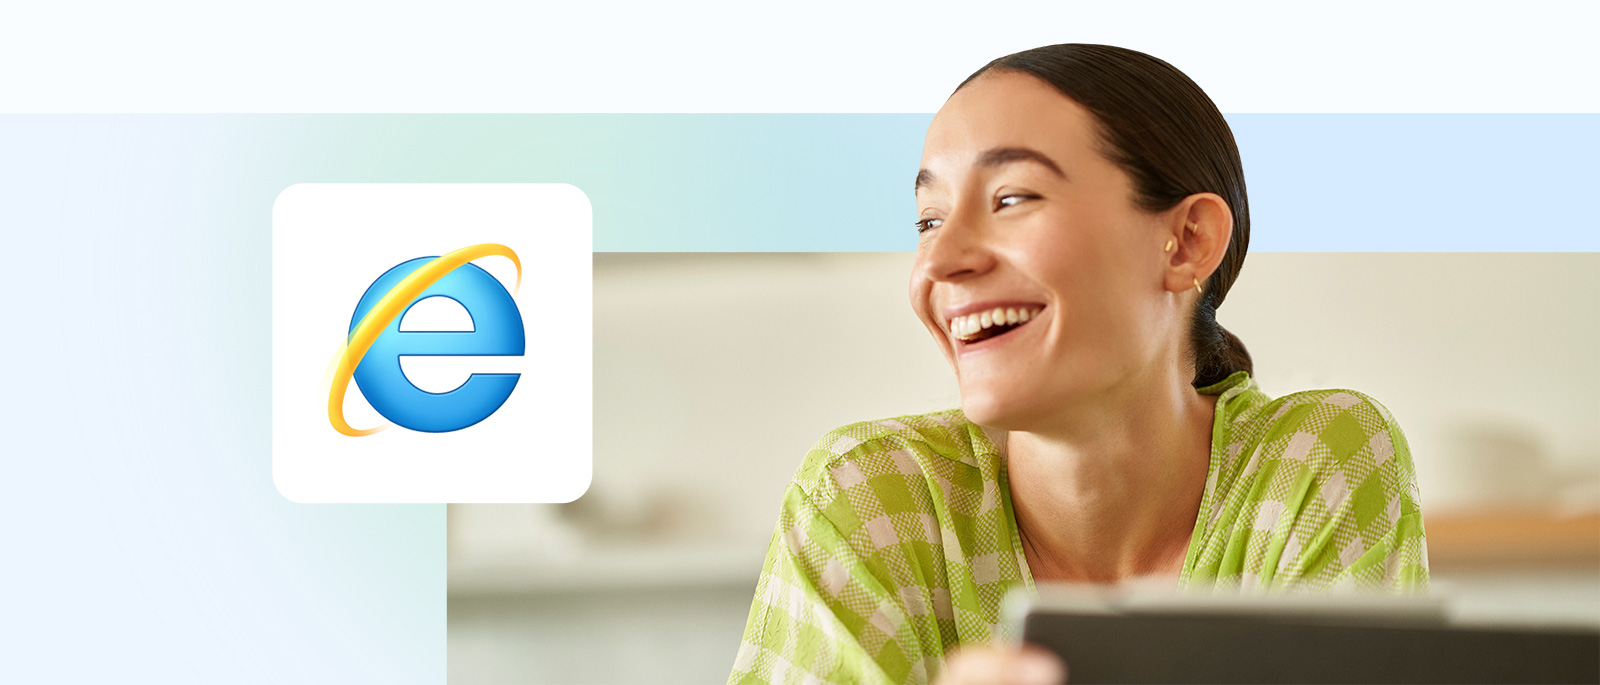 Internet Explorer アイコンが前面に表示されたノート PC の前に座って微笑む人。